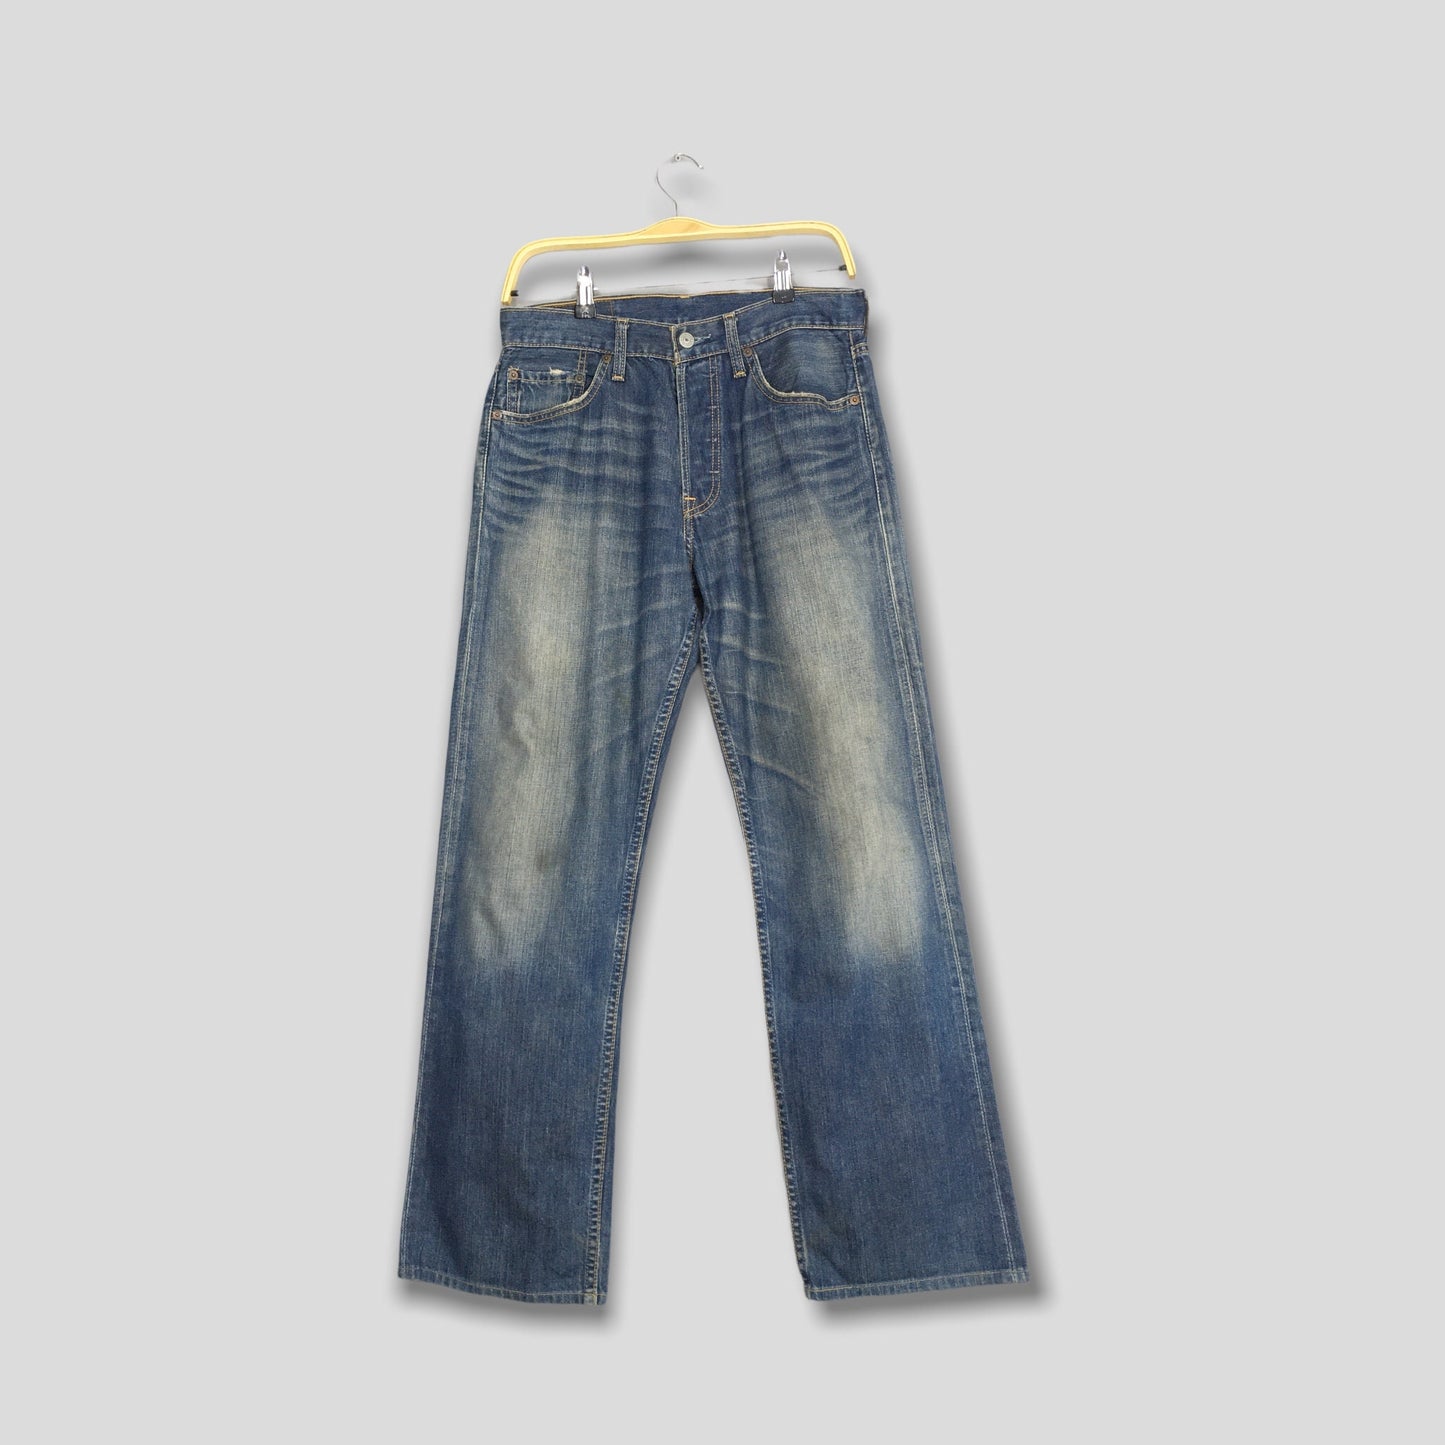 Levi's 501 Indigo Blue Jeans Medium Wash Size 30x29